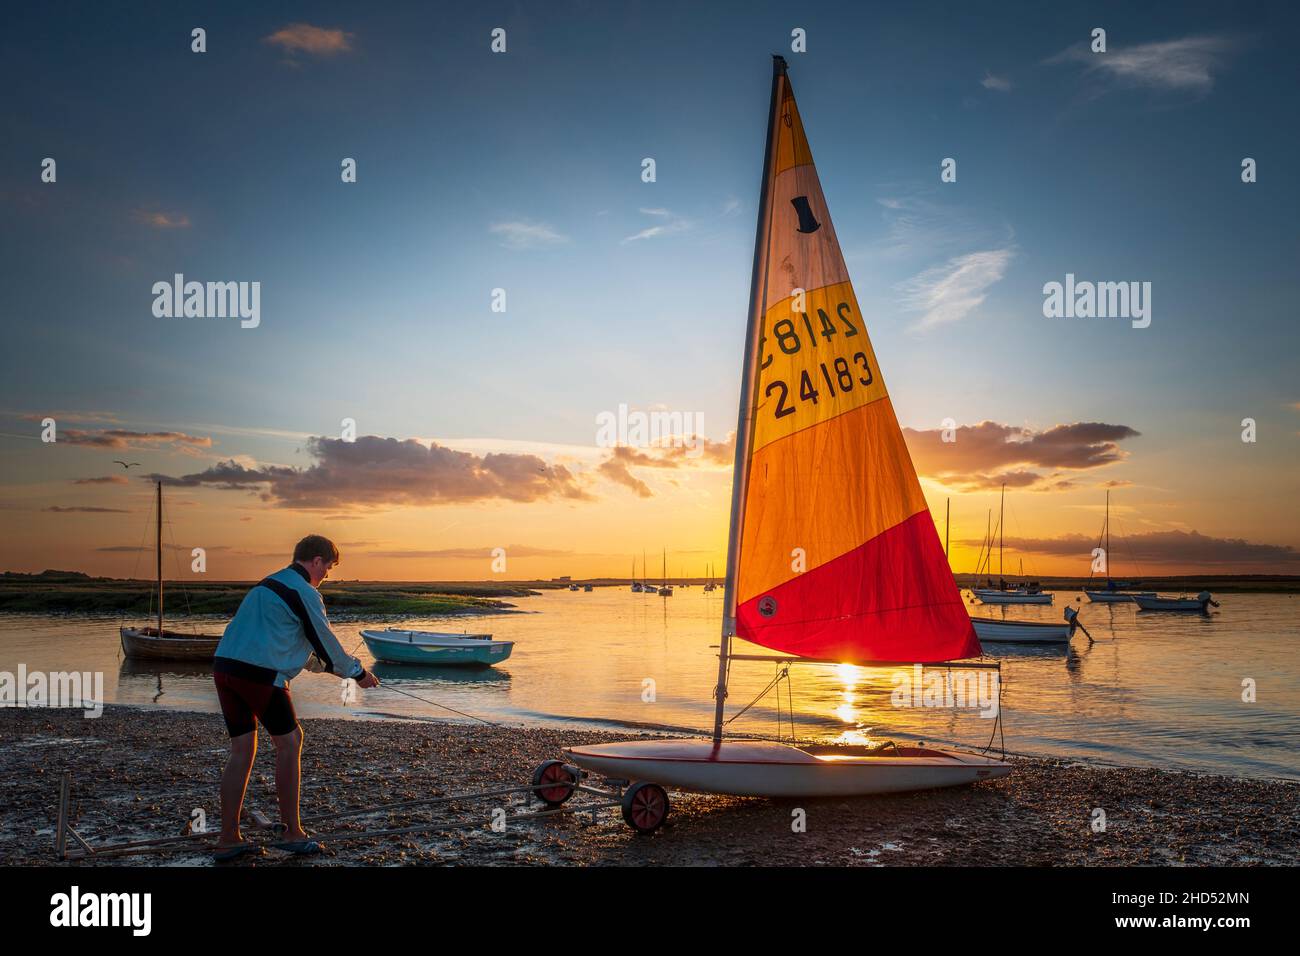 Teenage boy retrieving a dinghy after an evening sail. Stock Photo